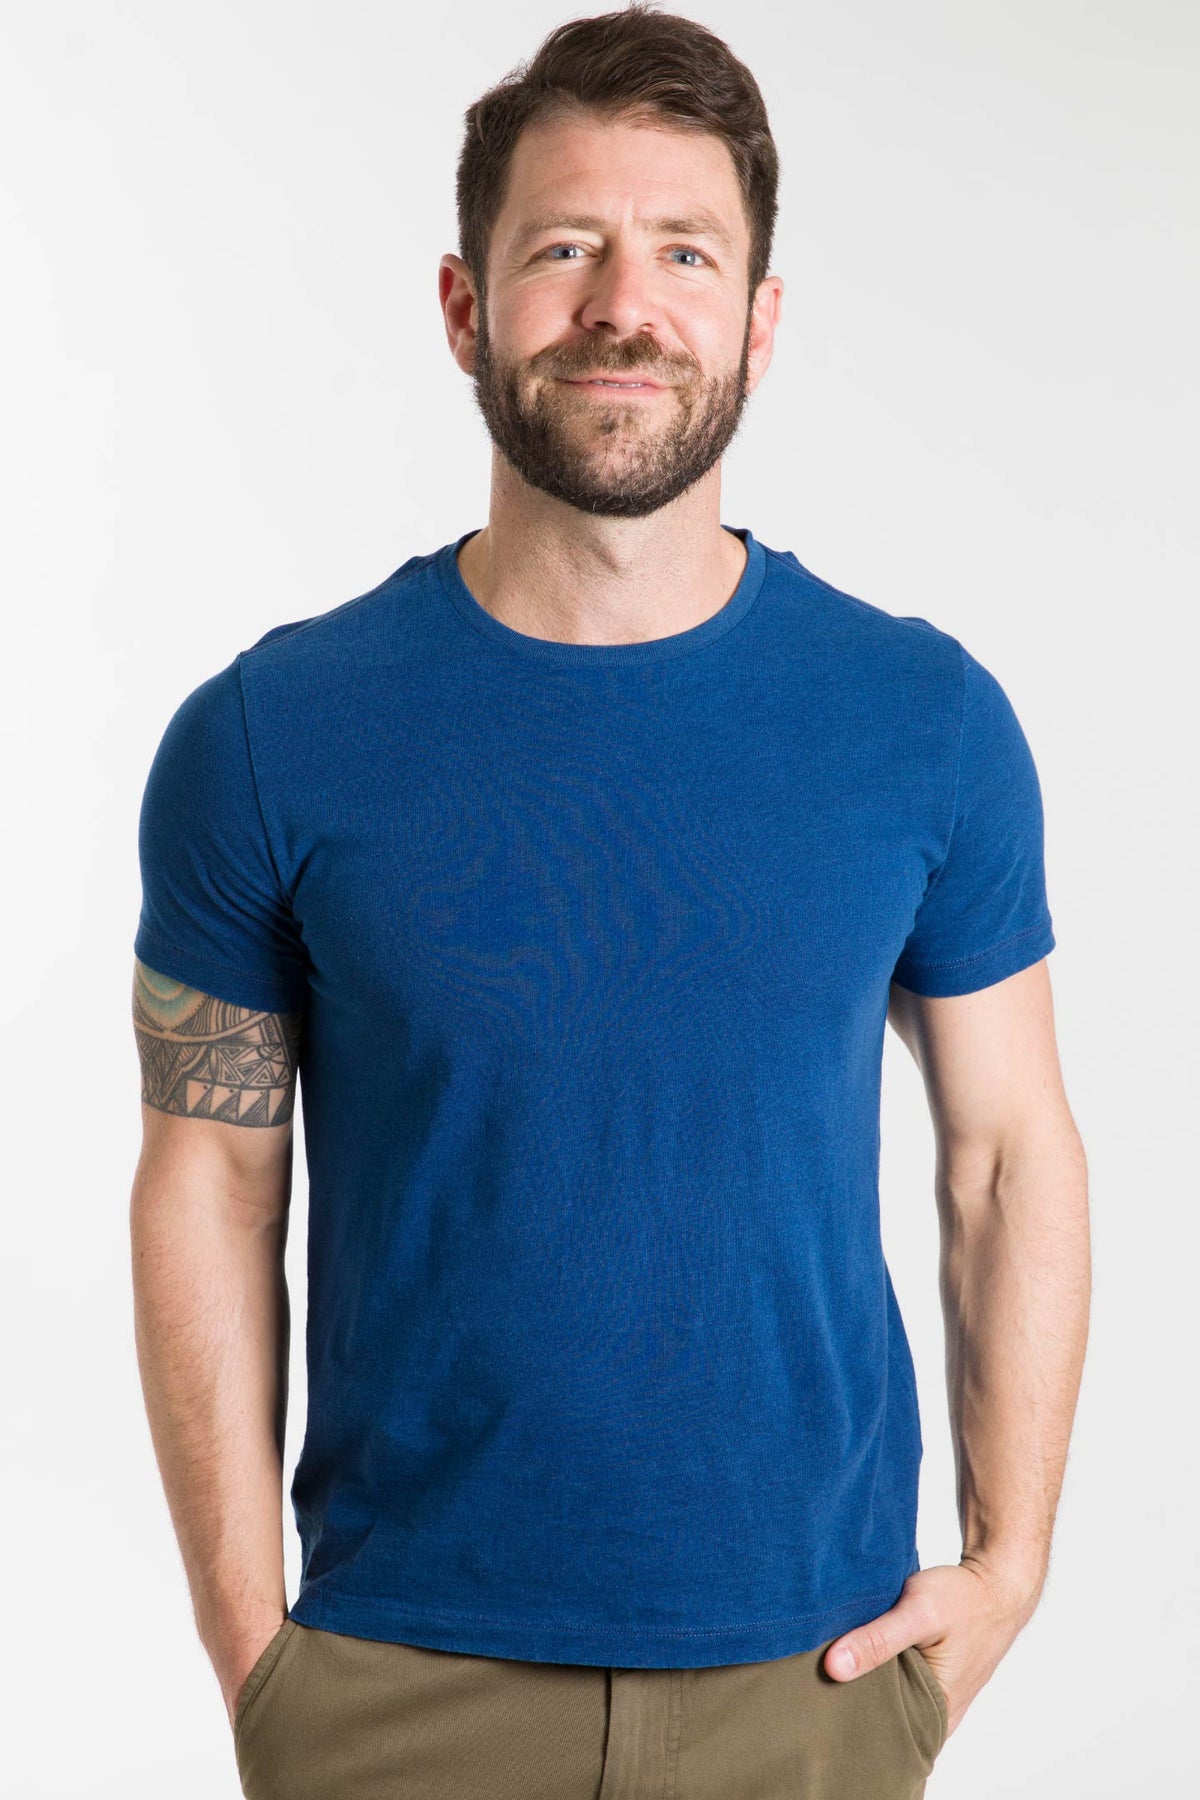 Ash & Erie Indigo Dyed Pima Cotton Crew Neck T-Shirt for Short Men